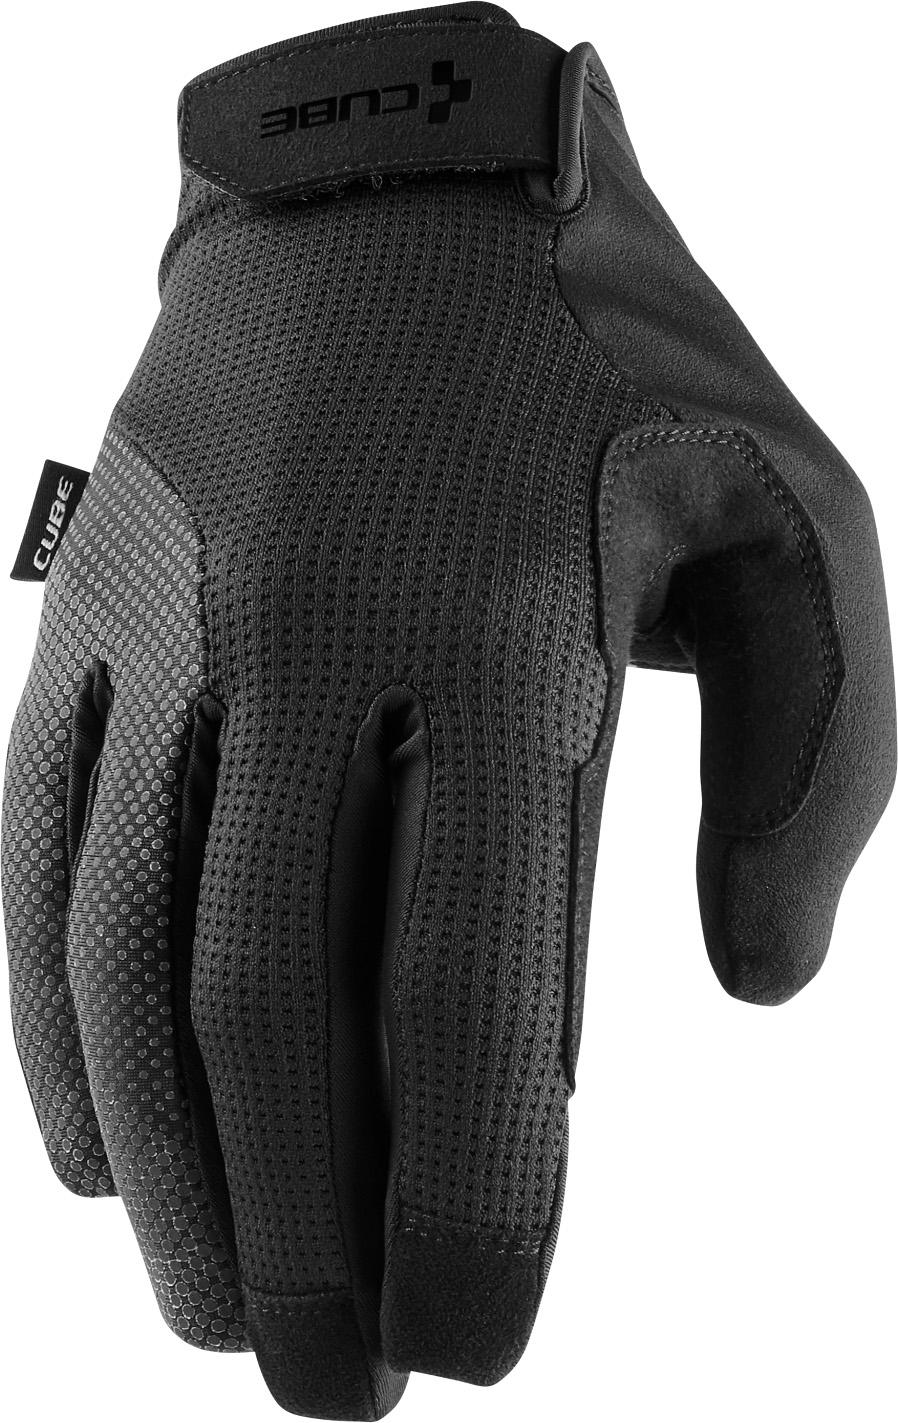 Comfort LF gloves